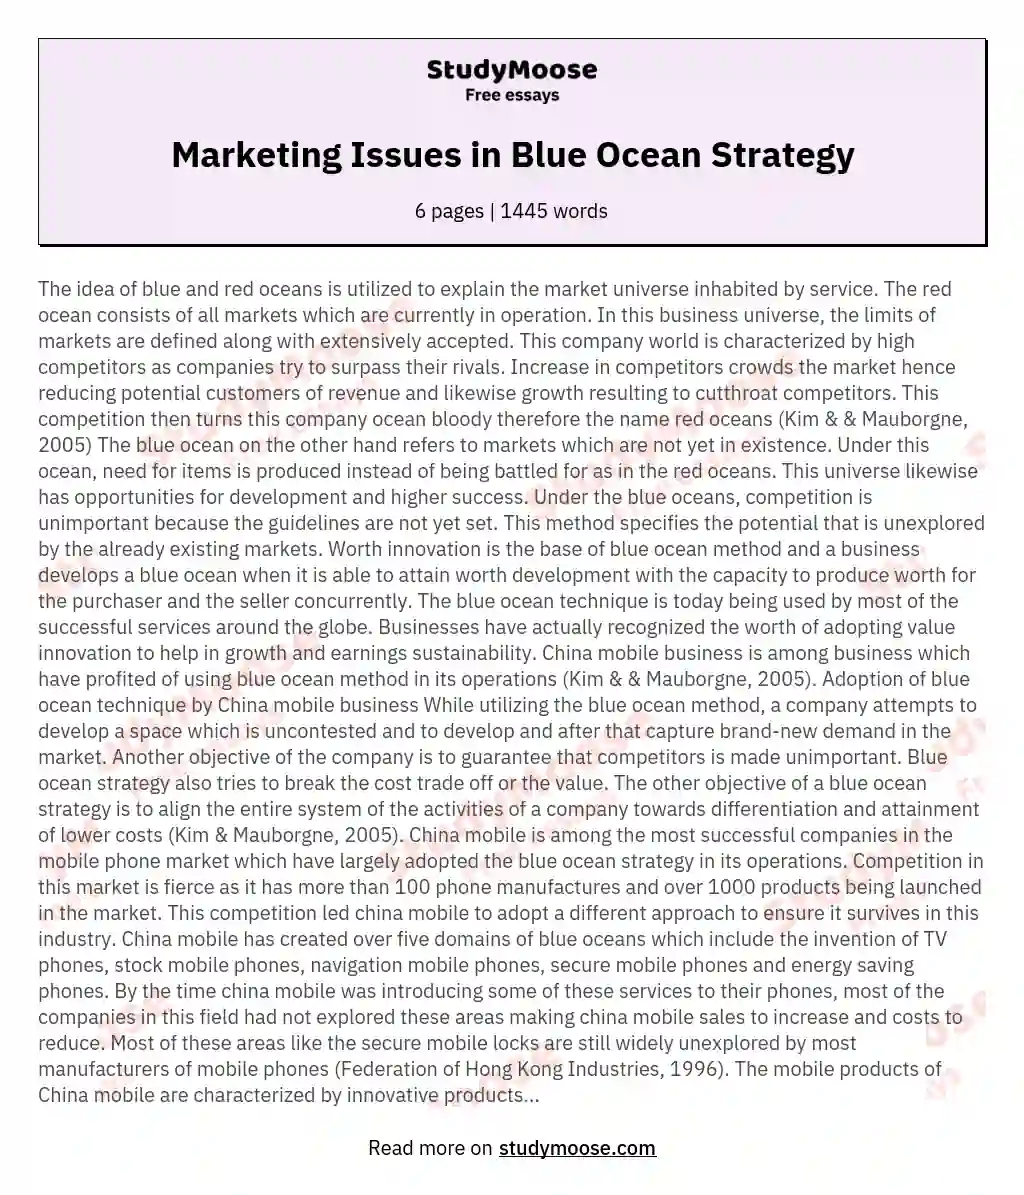 Marketing Issues in Blue Ocean Strategy essay